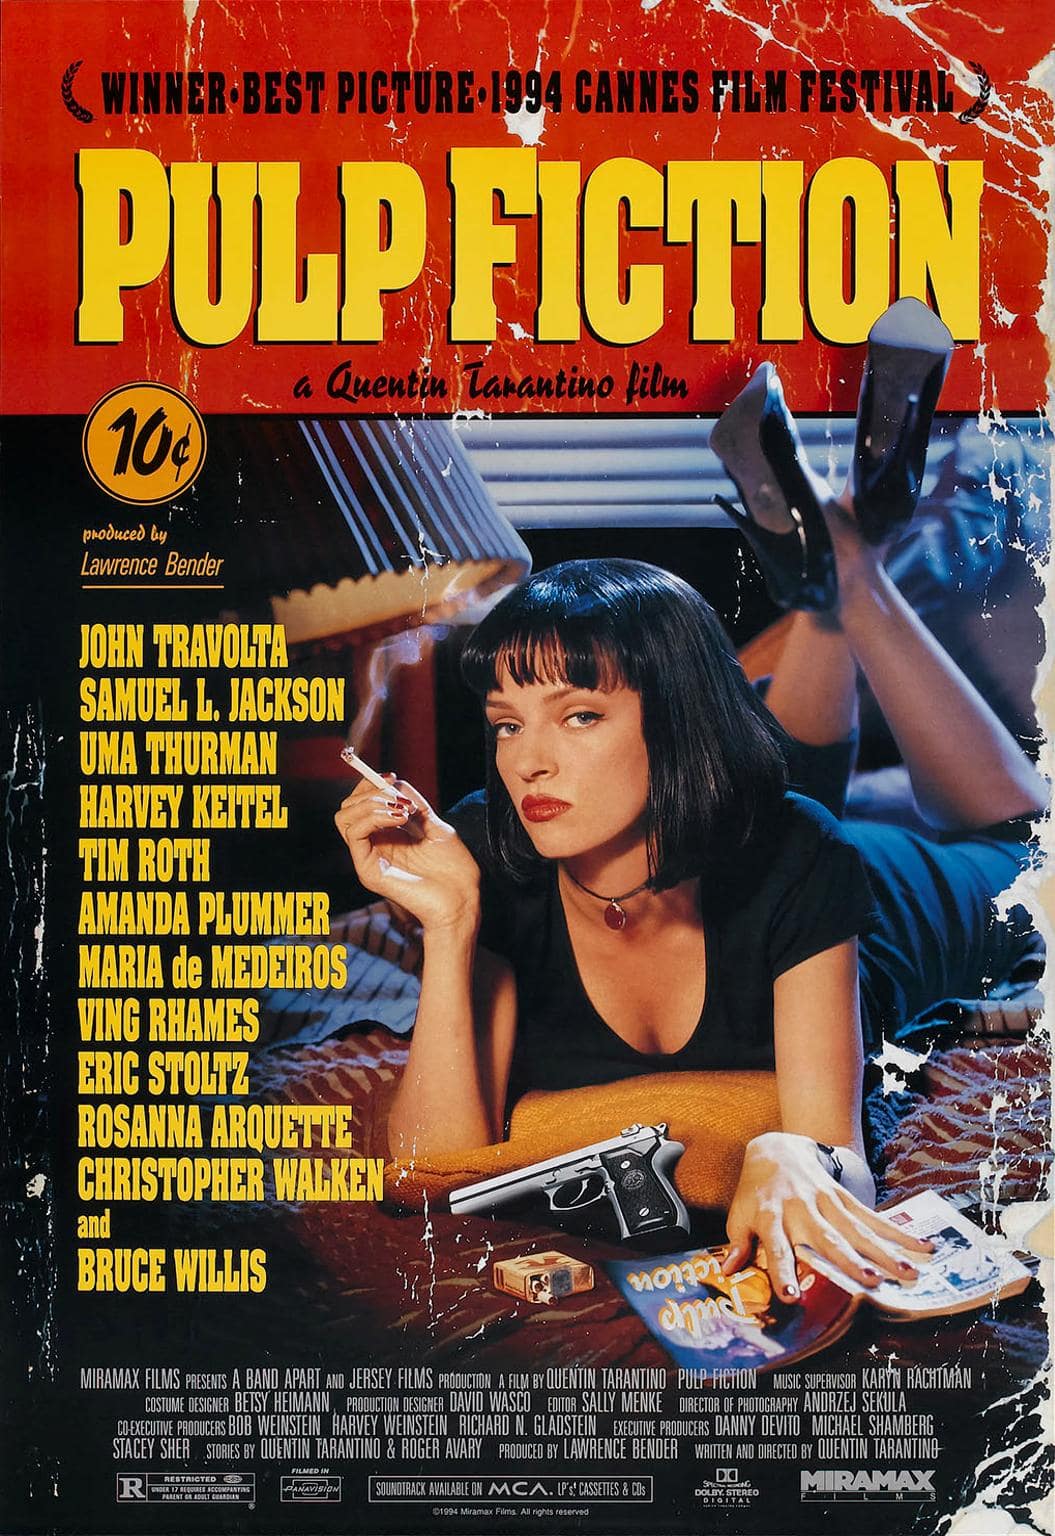 داستان عامه‌پسند (Pulp Fiction)